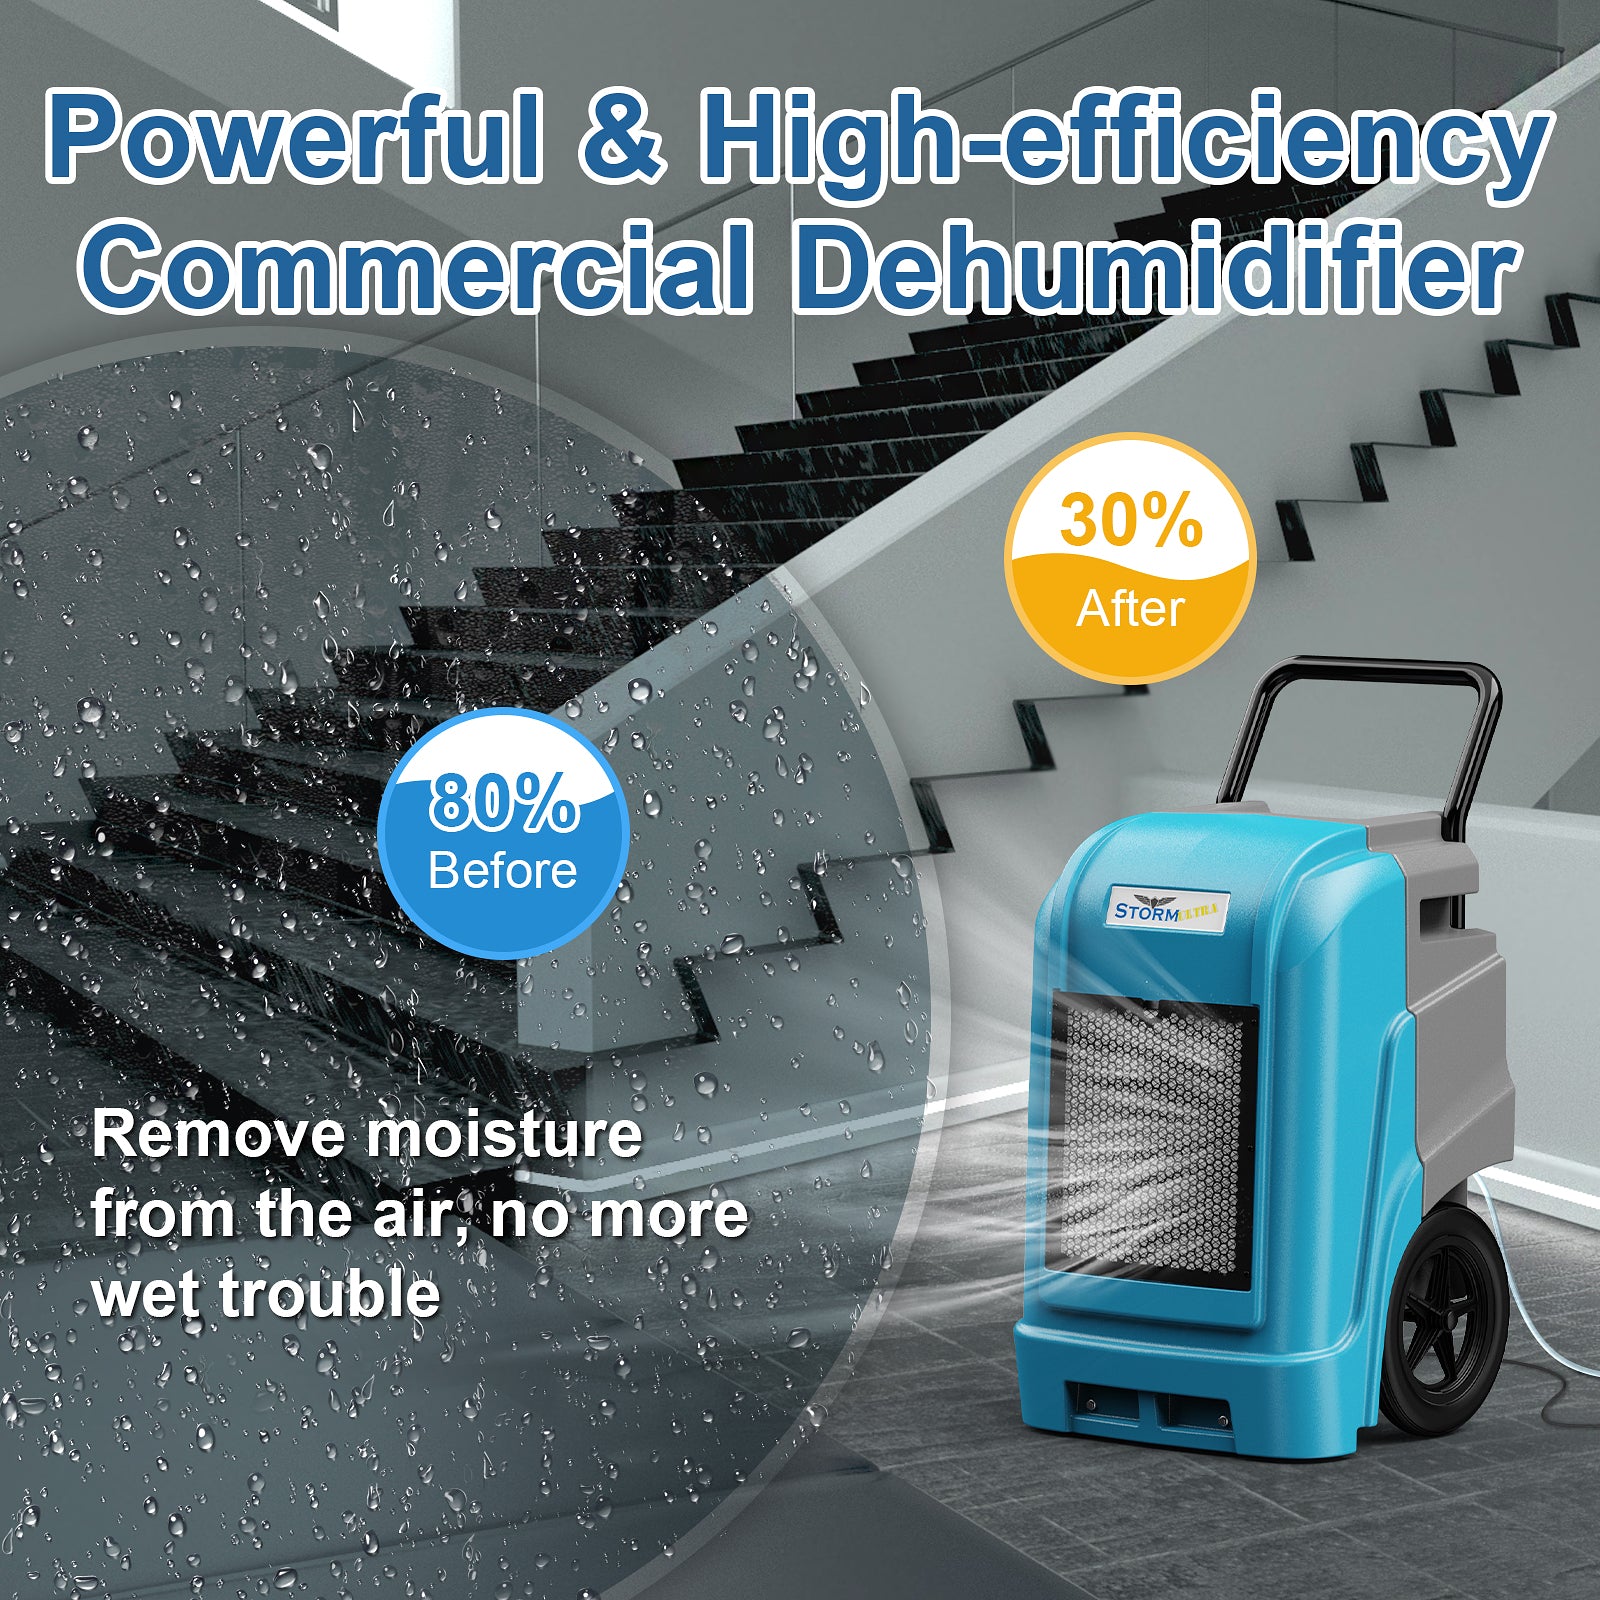 AlorAir® Storm Ultra | 190 Pints Smart Wi-Fi Large Capacity Industrial Dehumidifier for Basements, Garages & Job Sites